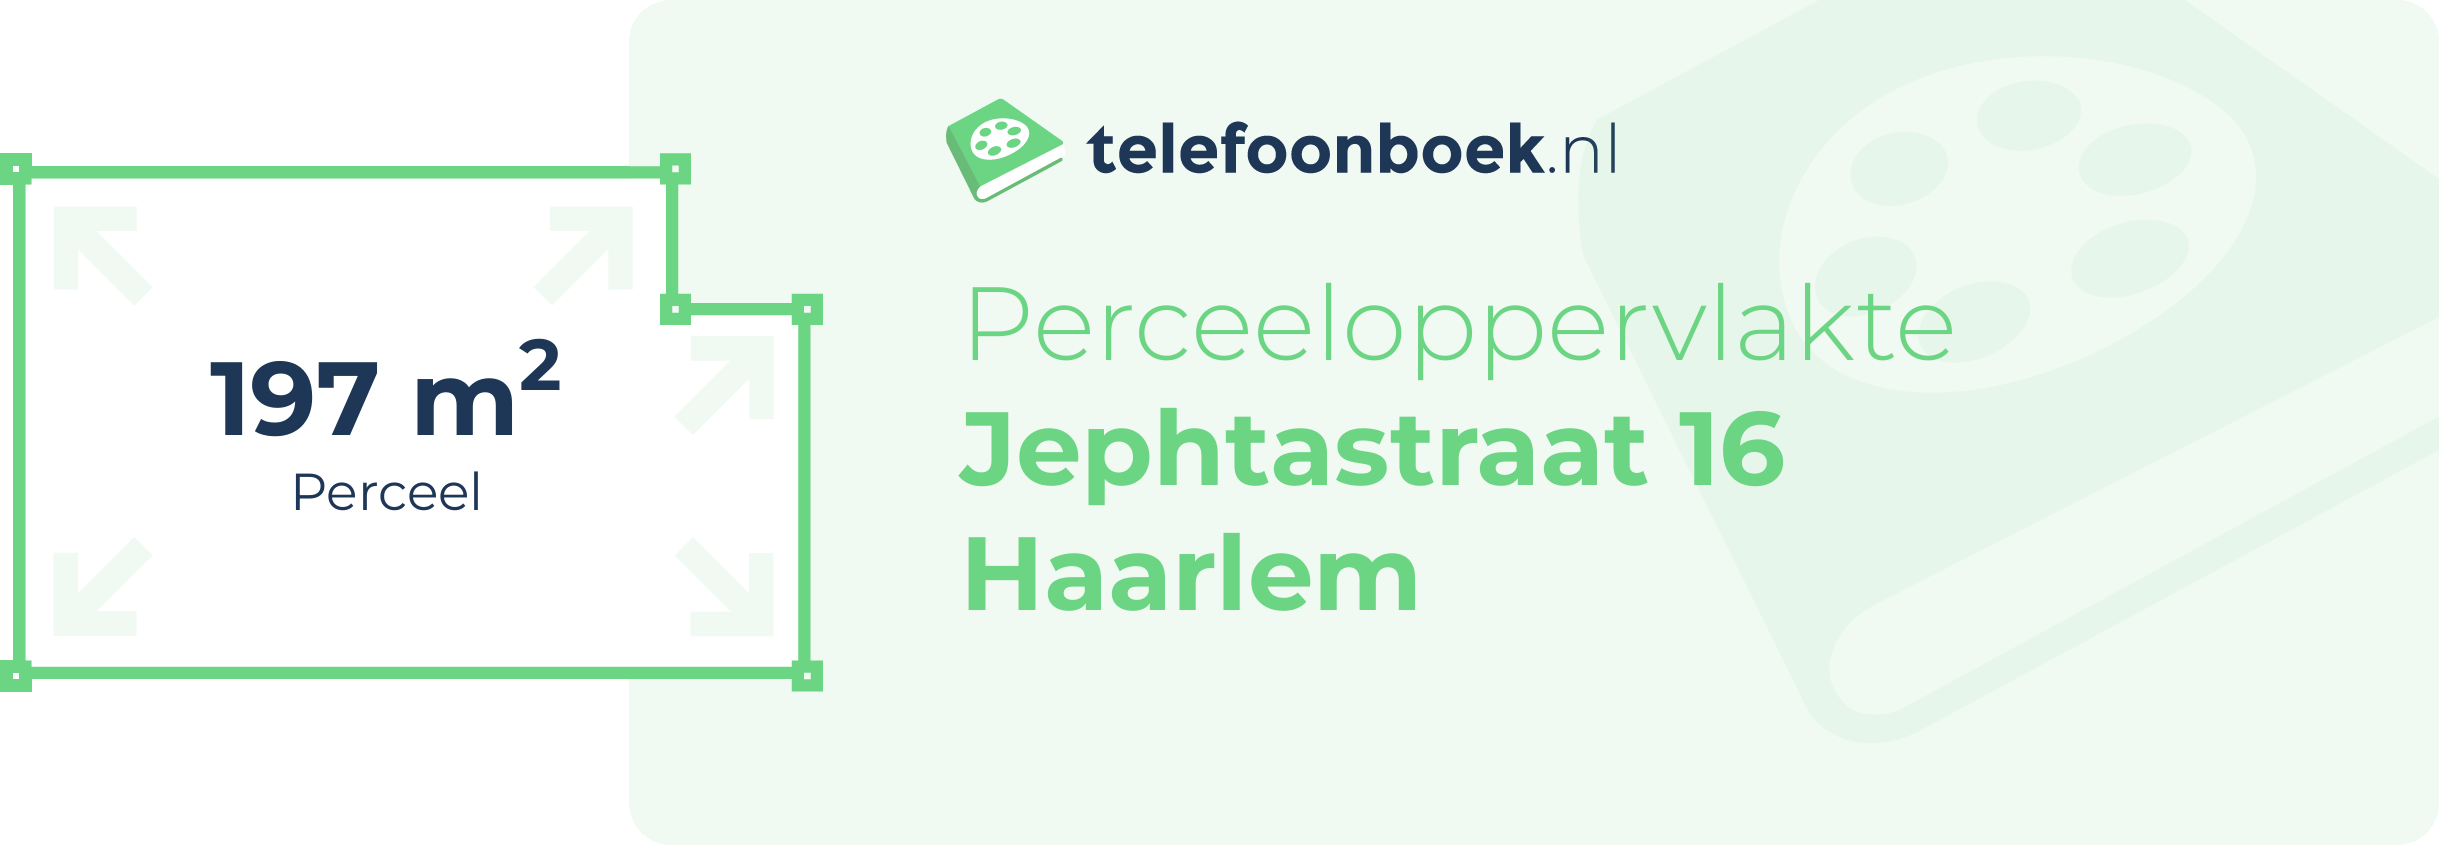 Perceeloppervlakte Jephtastraat 16 Haarlem